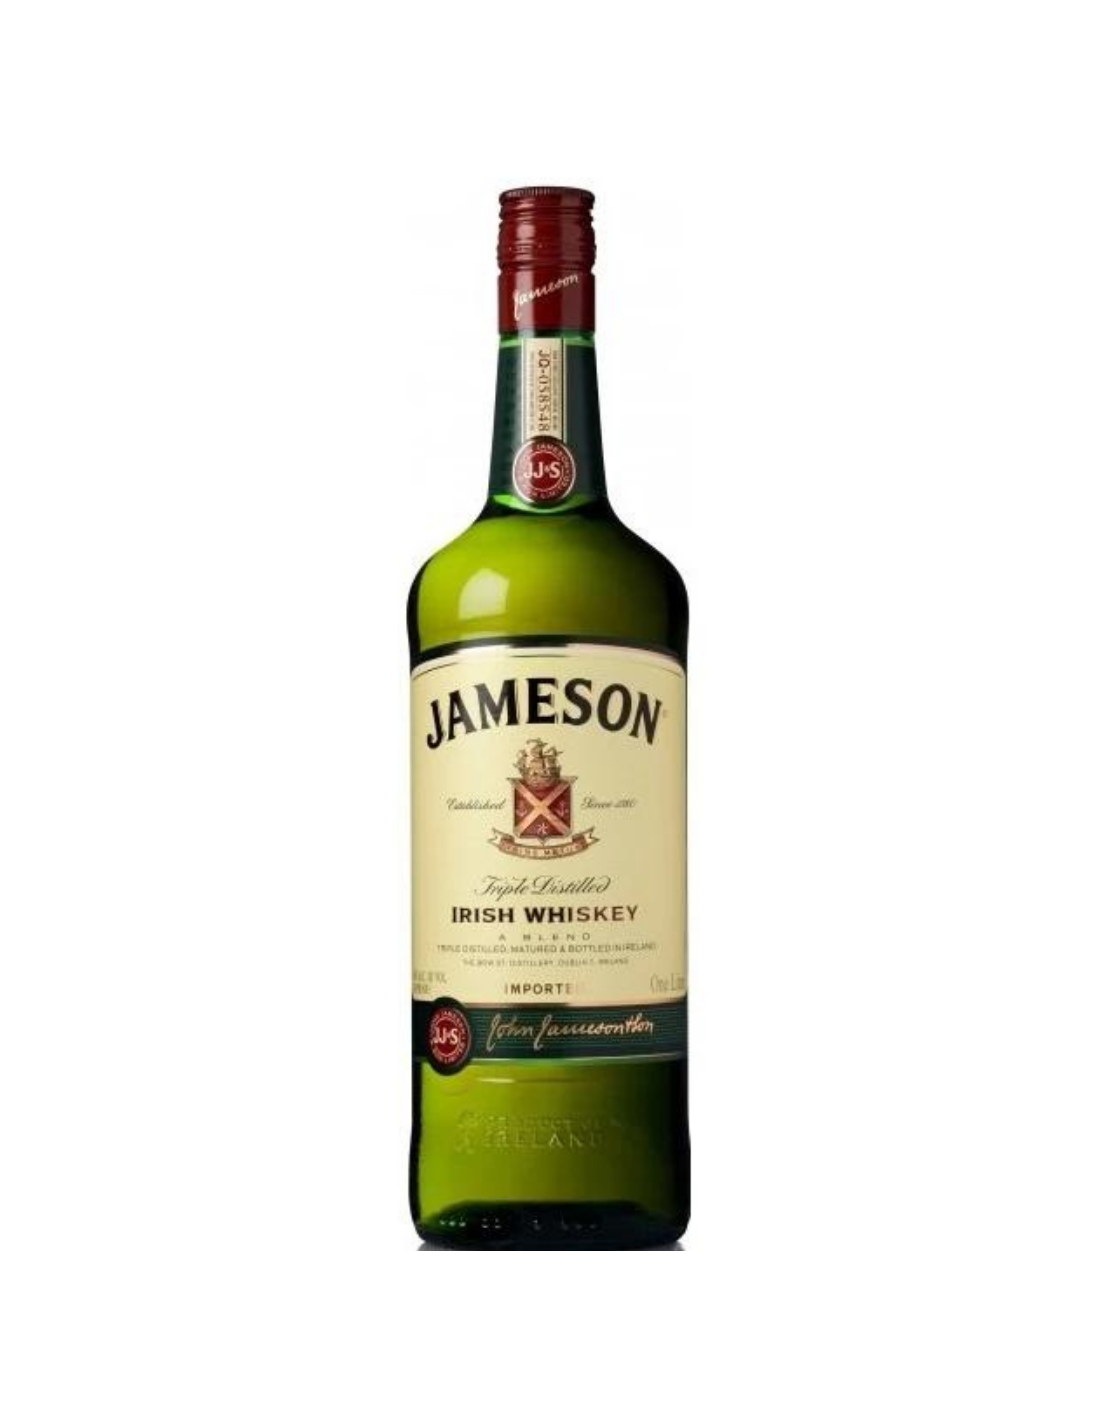 Whisky Jameson Original, 1L, 40% alc., Irlanda alcooldiscount.ro